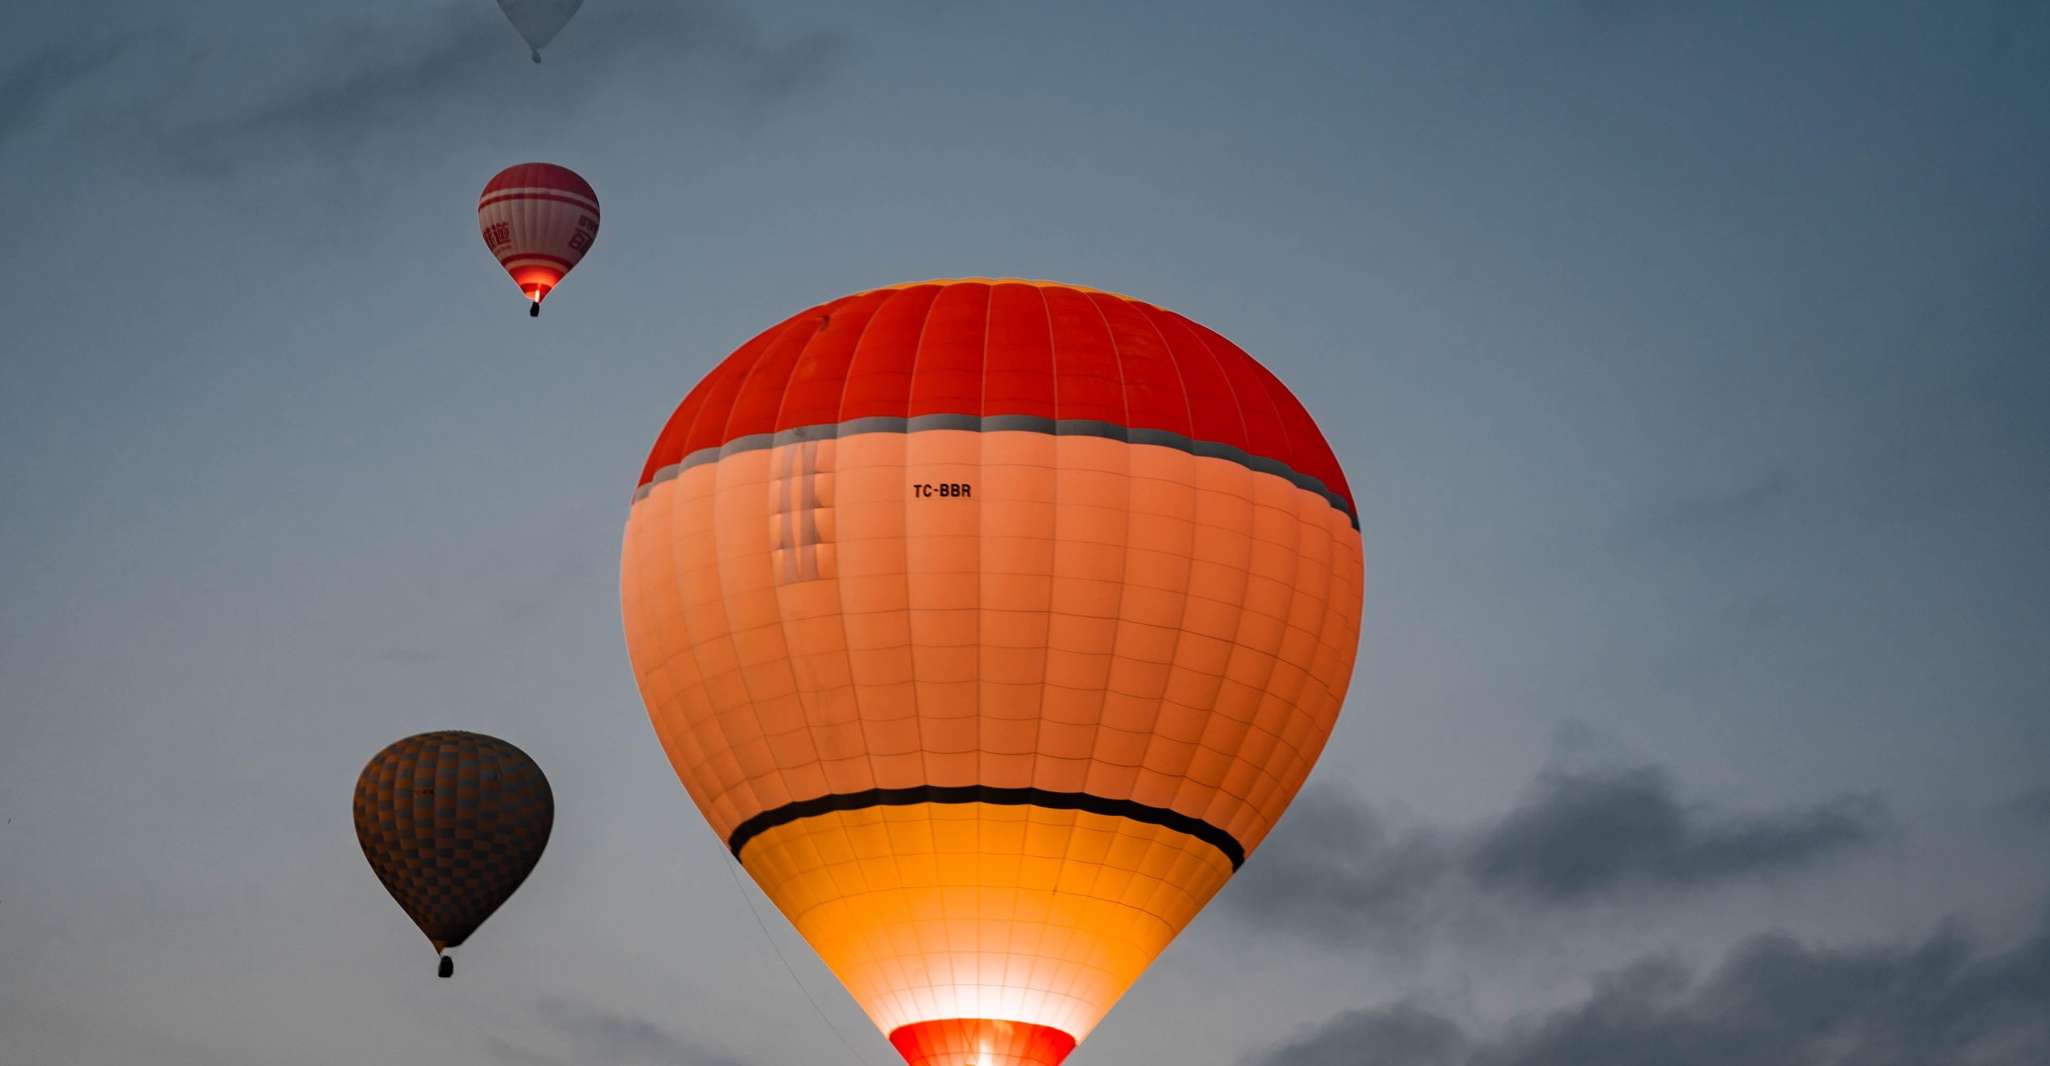 Cappadocia, Goreme Hot Air Balloon Flight Over Fairychimneys - Housity